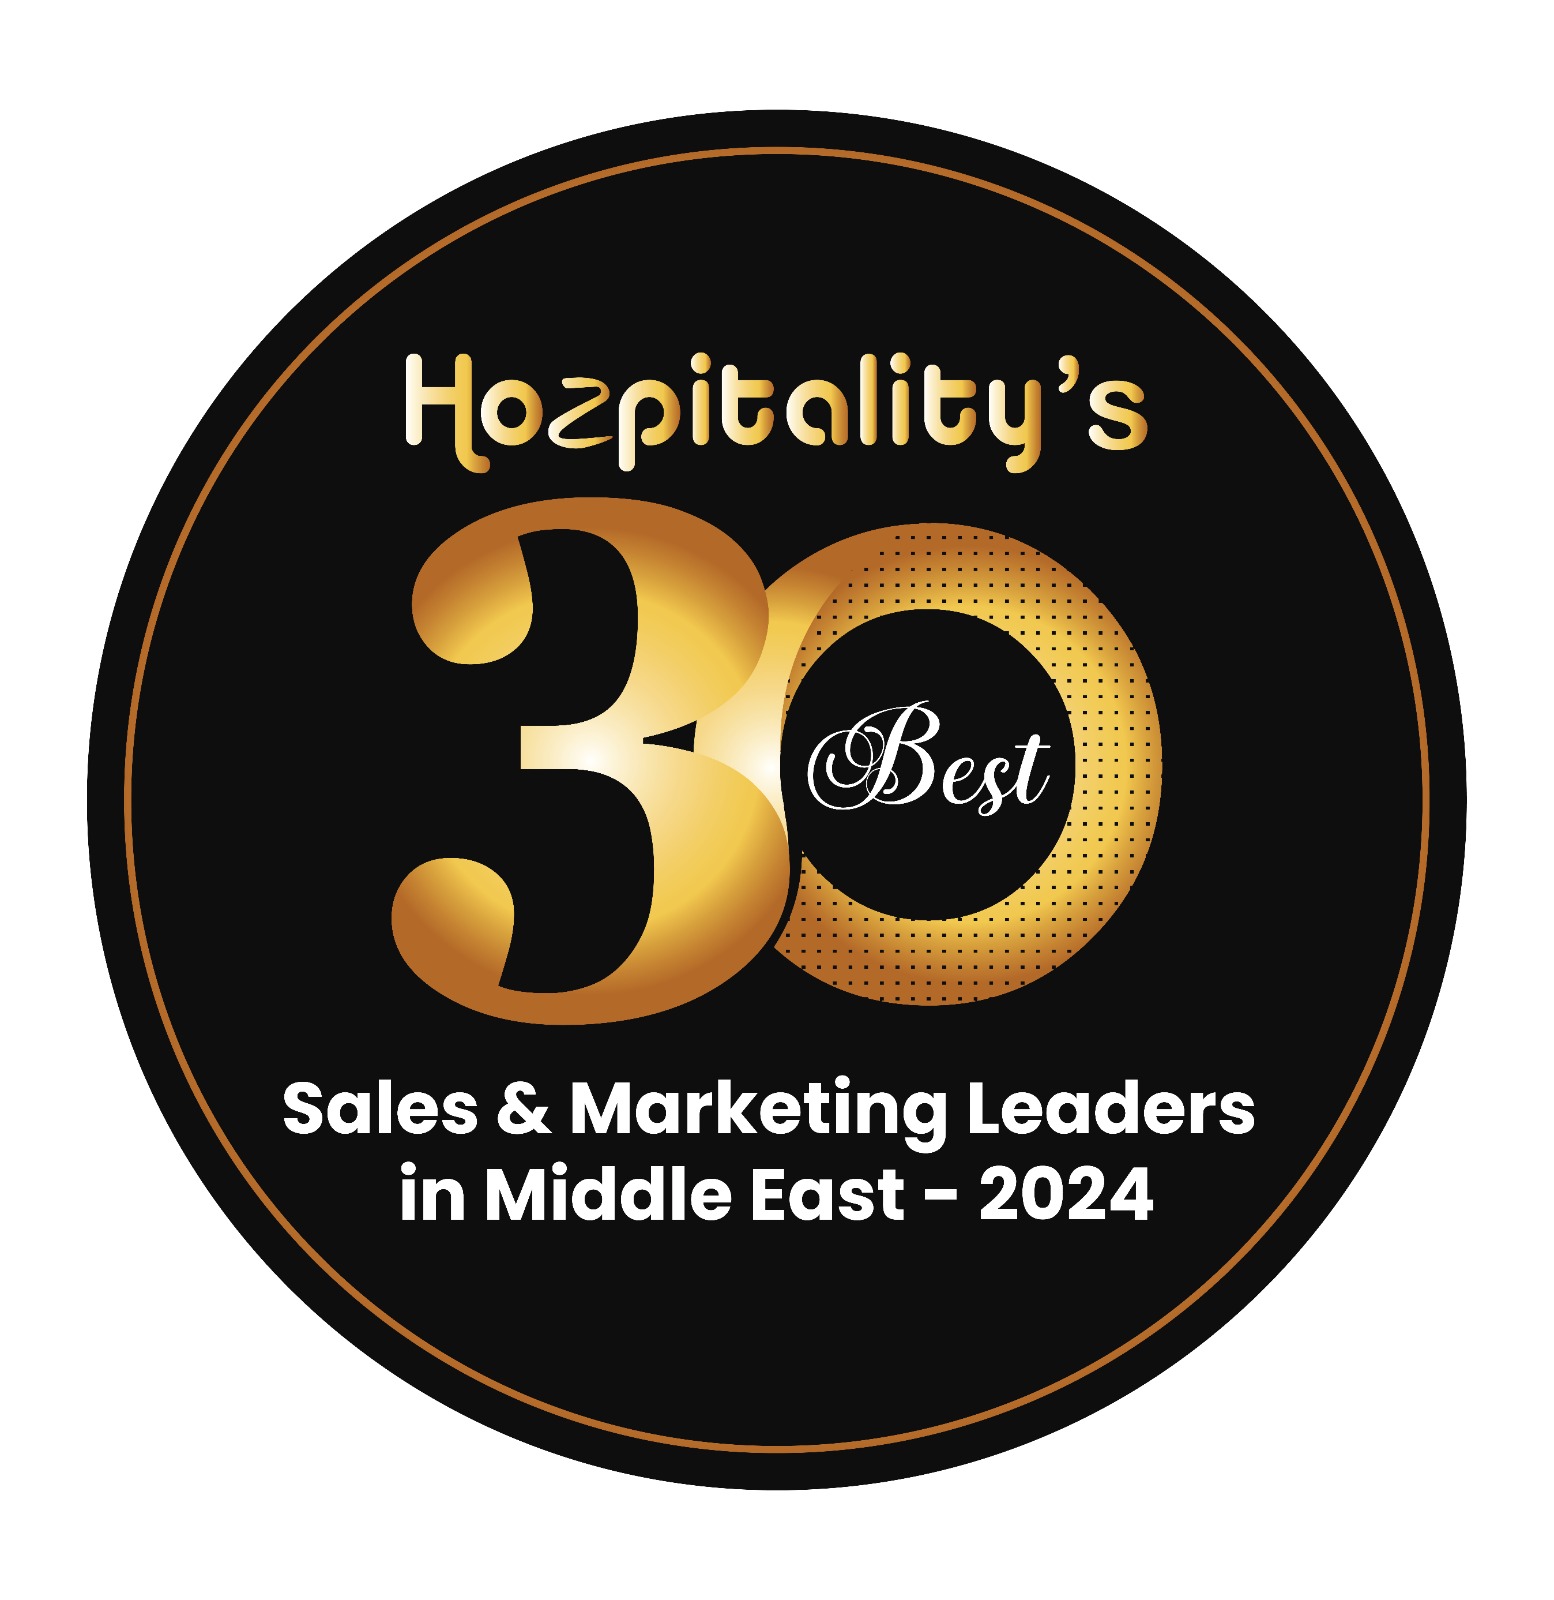 Sales & Marketing Leaders Hospitality Awards 2024